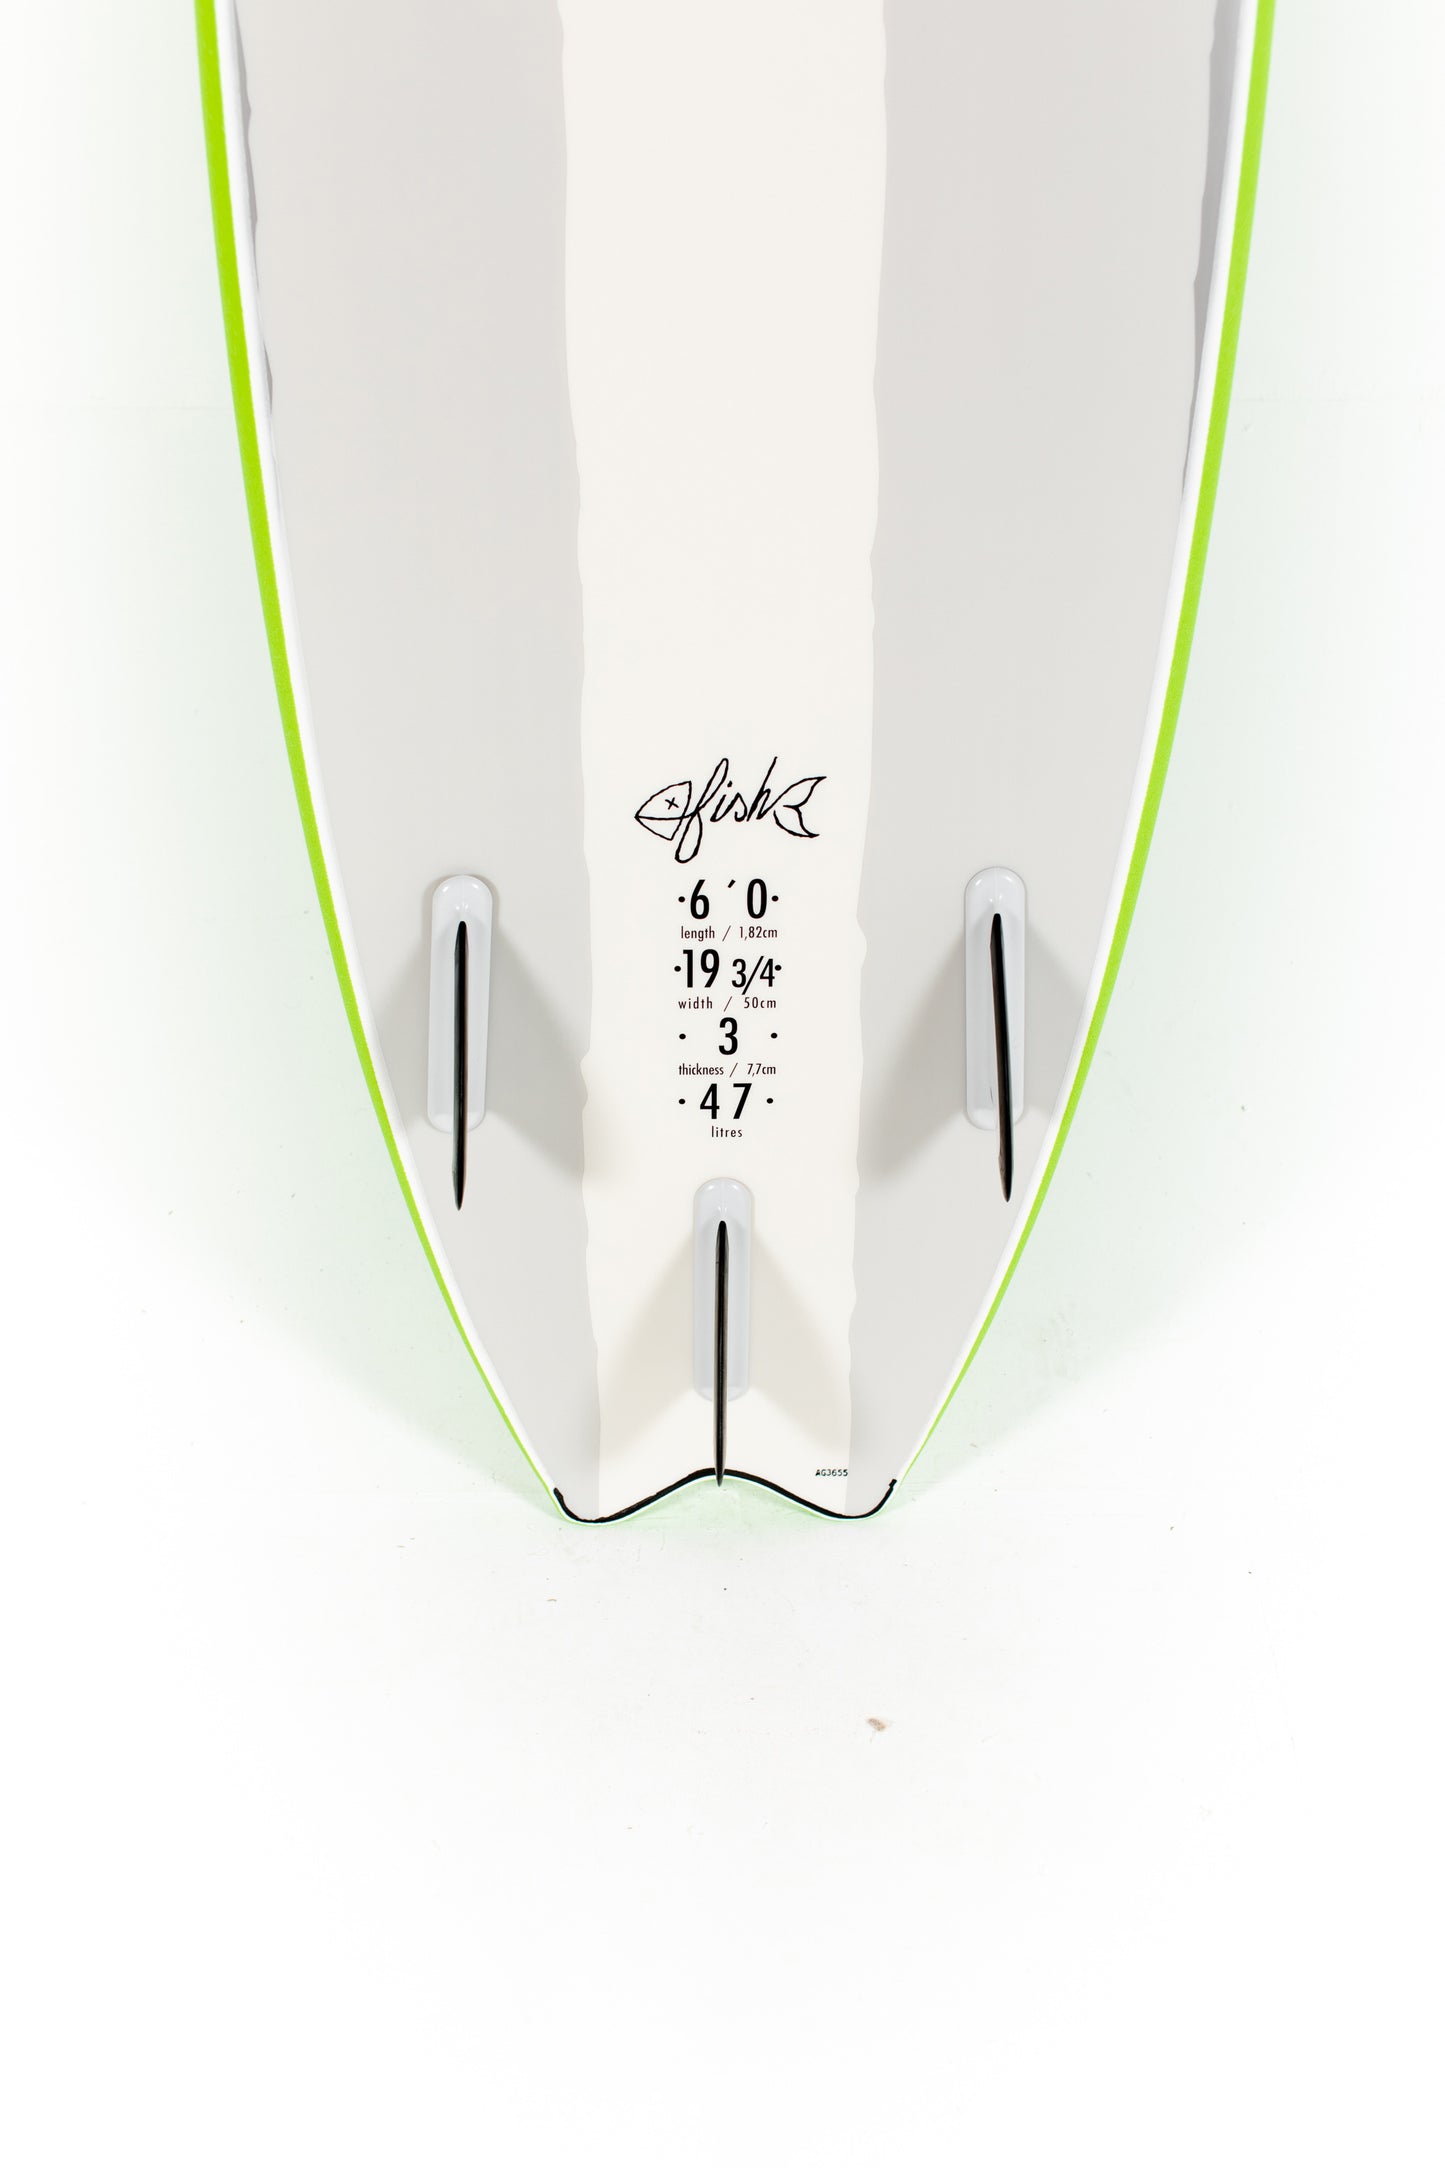 
                  
                    Pukas-Surf-Shop-Indio-Surfboards-Softboards-Fish
                  
                